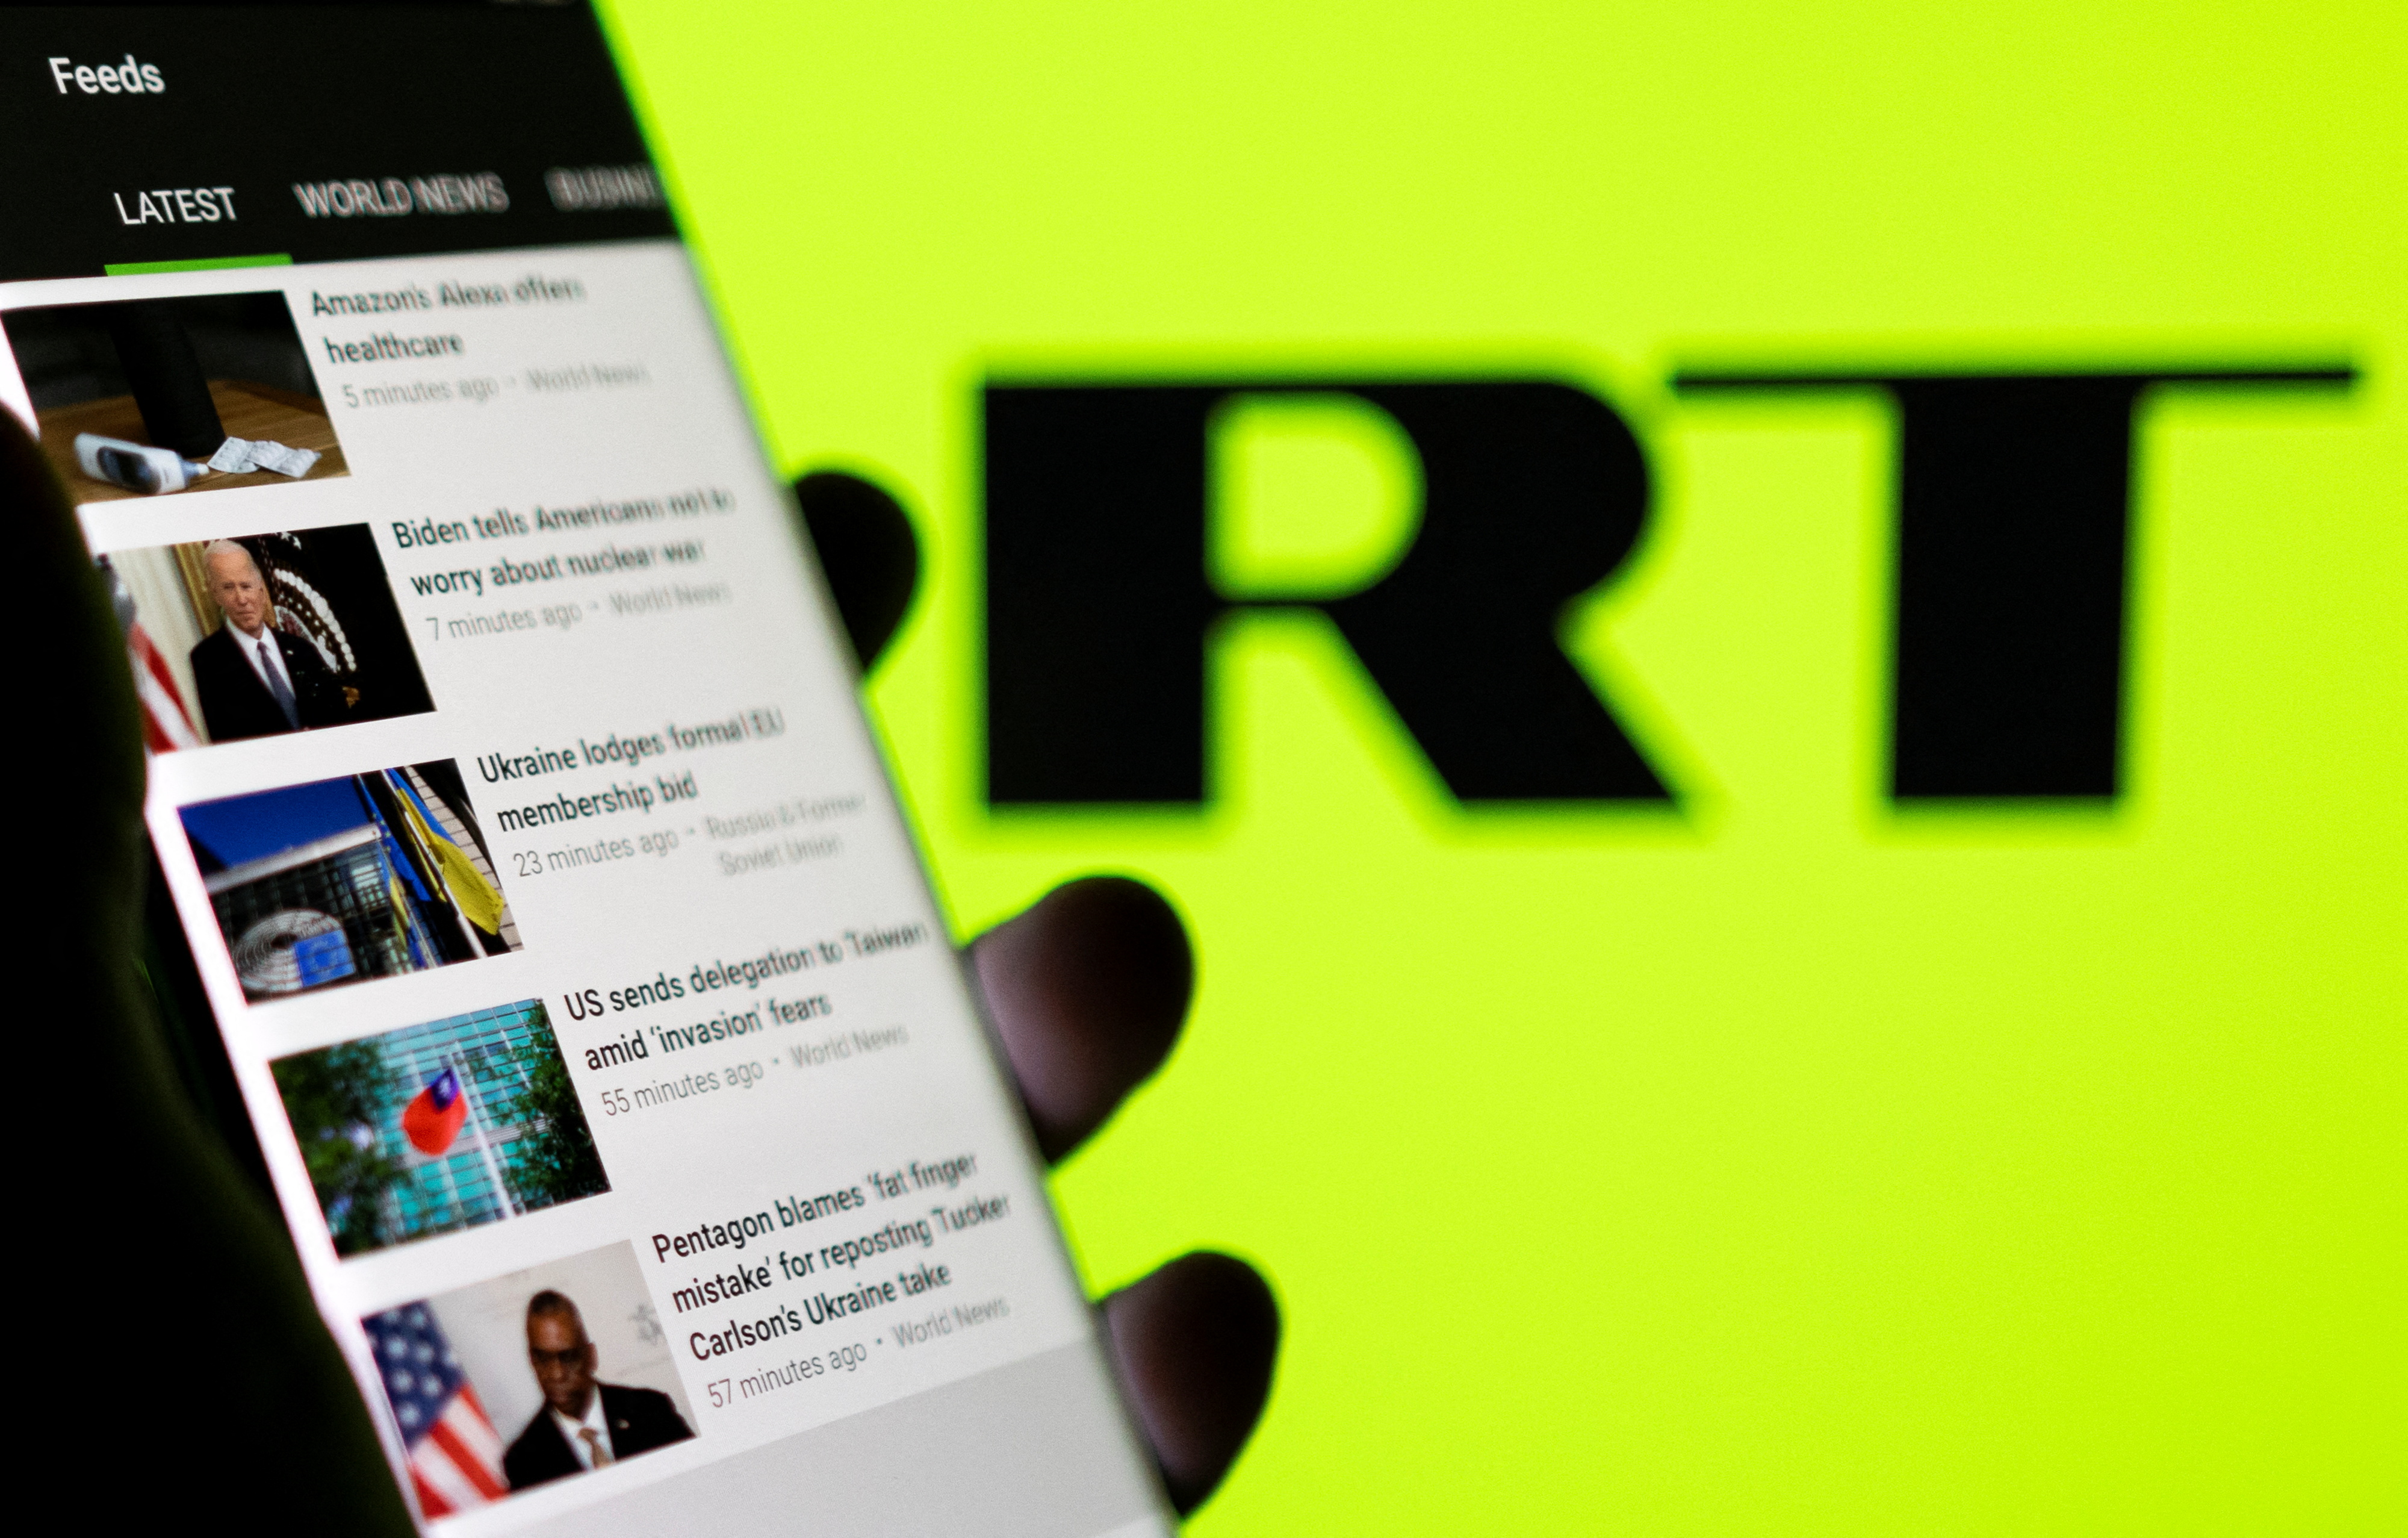 EU bans RT, Sputnik over disinformation | Reuters